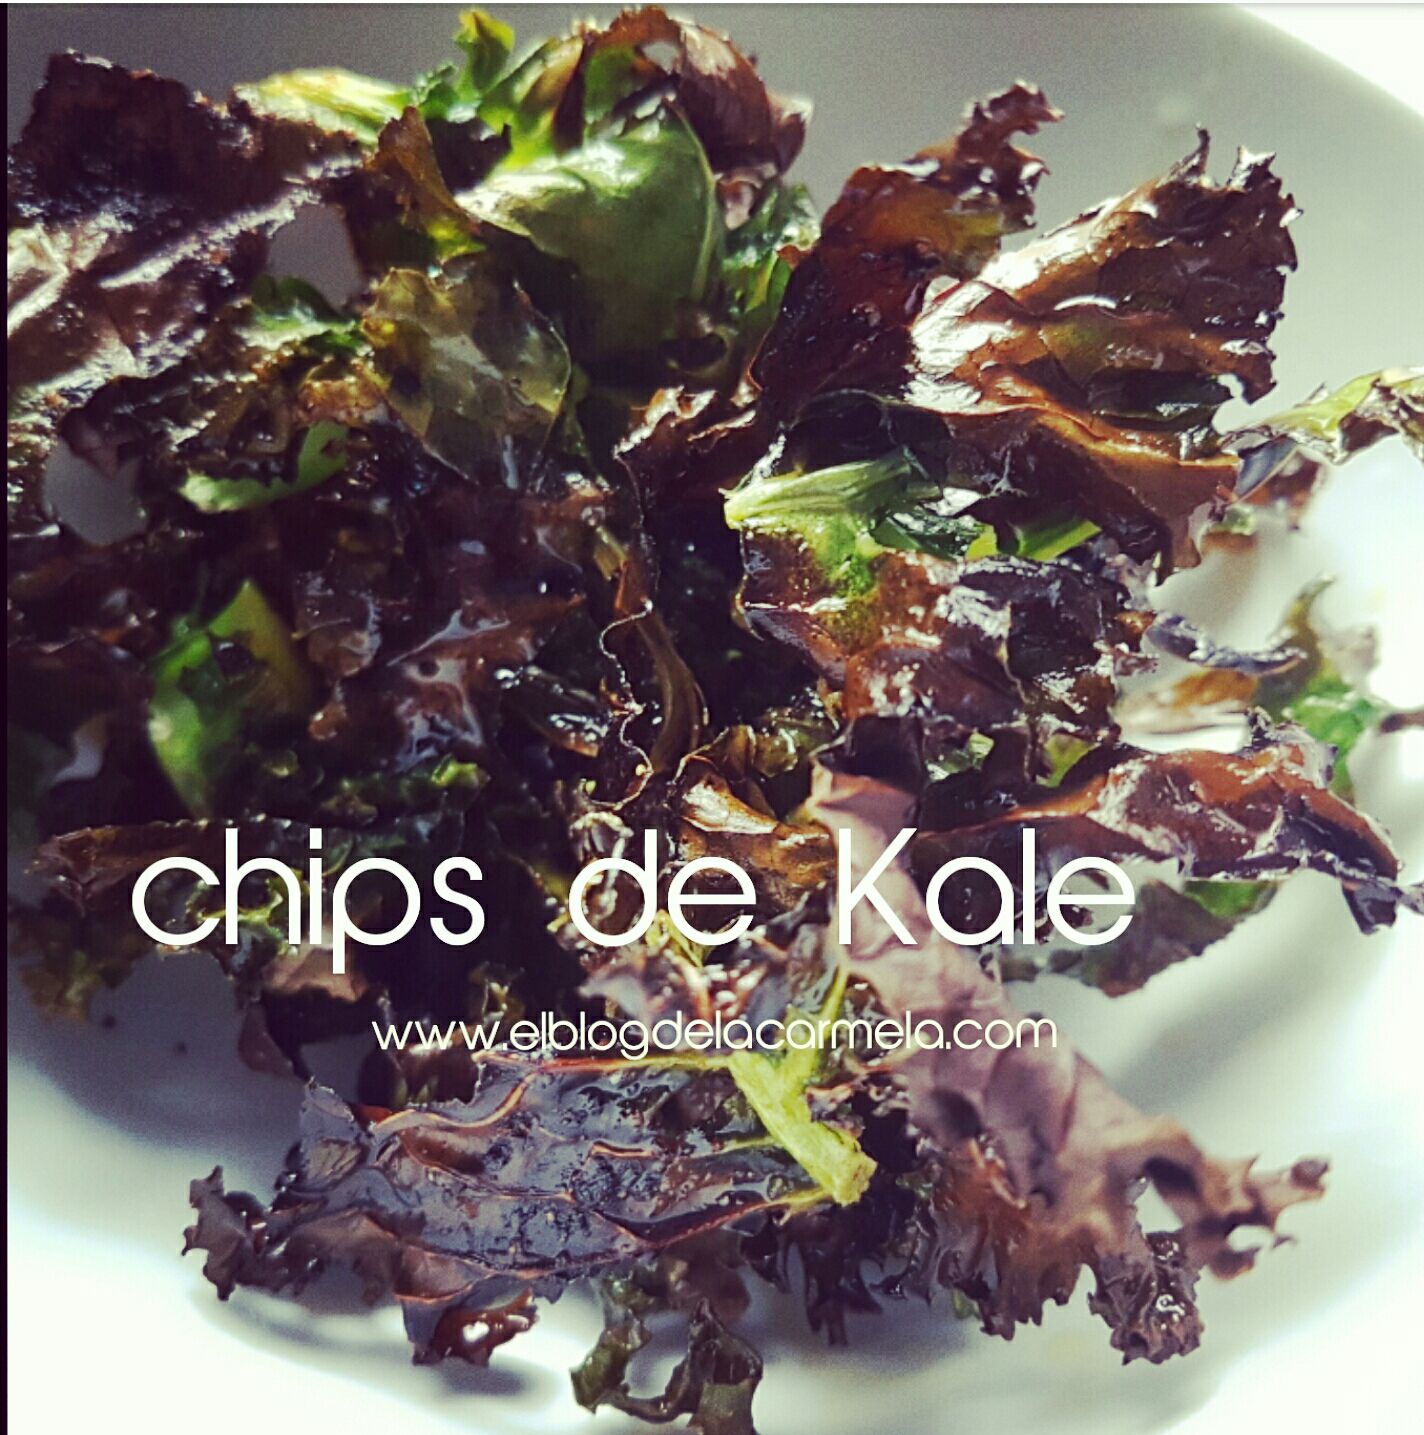 Chips de kale (berza o col rizada)